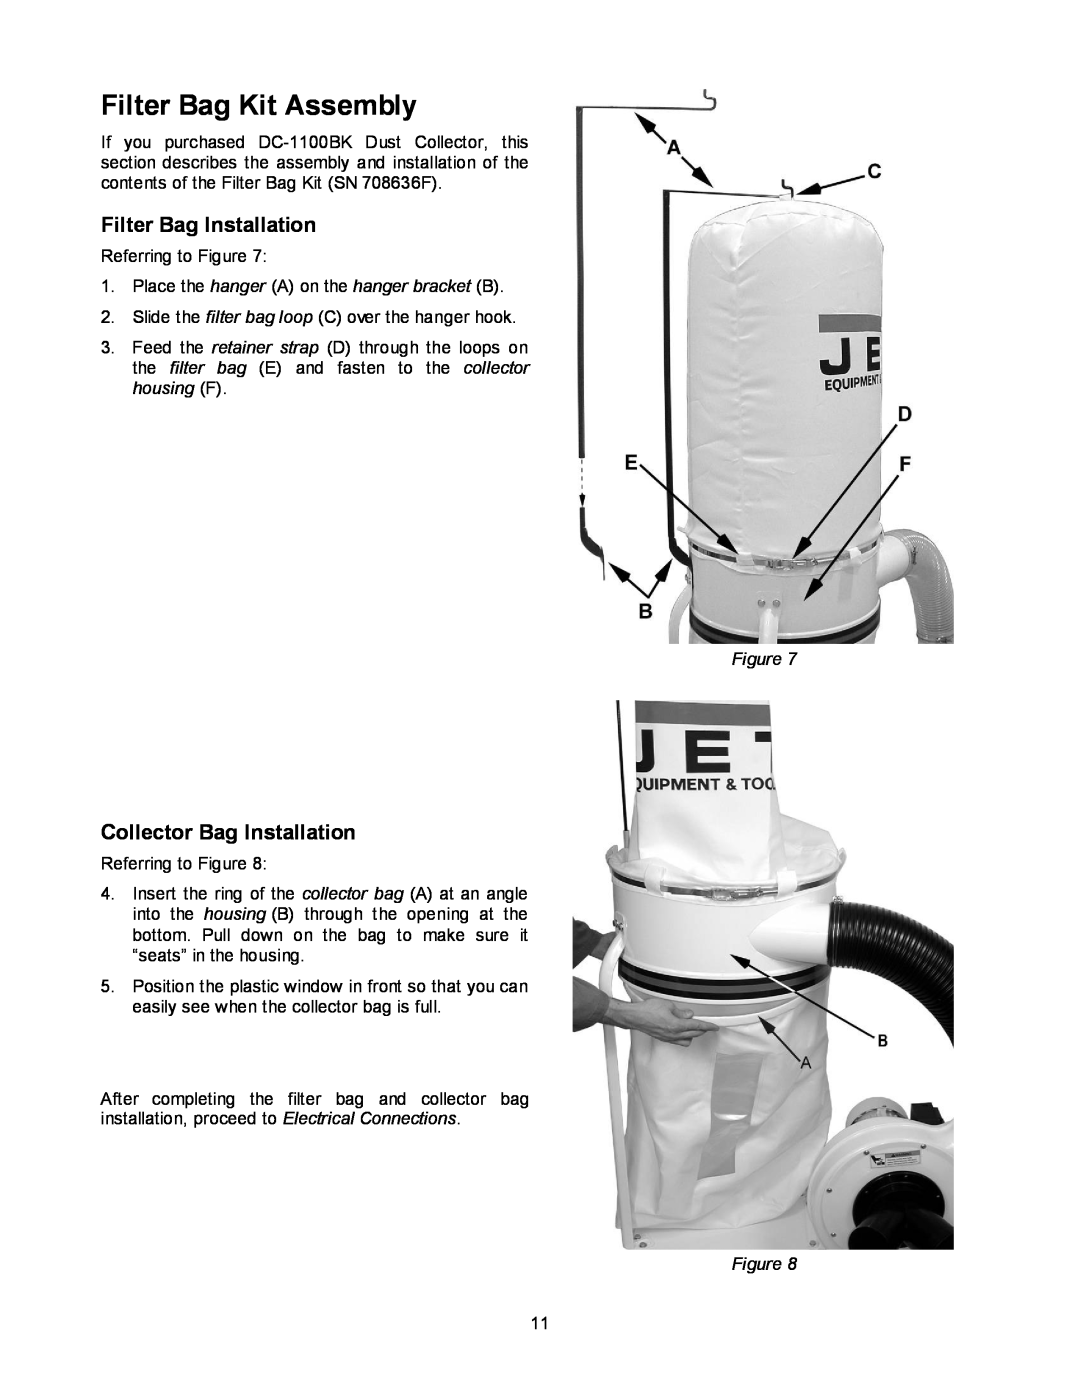 Jet Tools DC-1100CK operating instructions Filter Bag Kit Assembly, Filter Bag Installation, Collector Bag Installation 